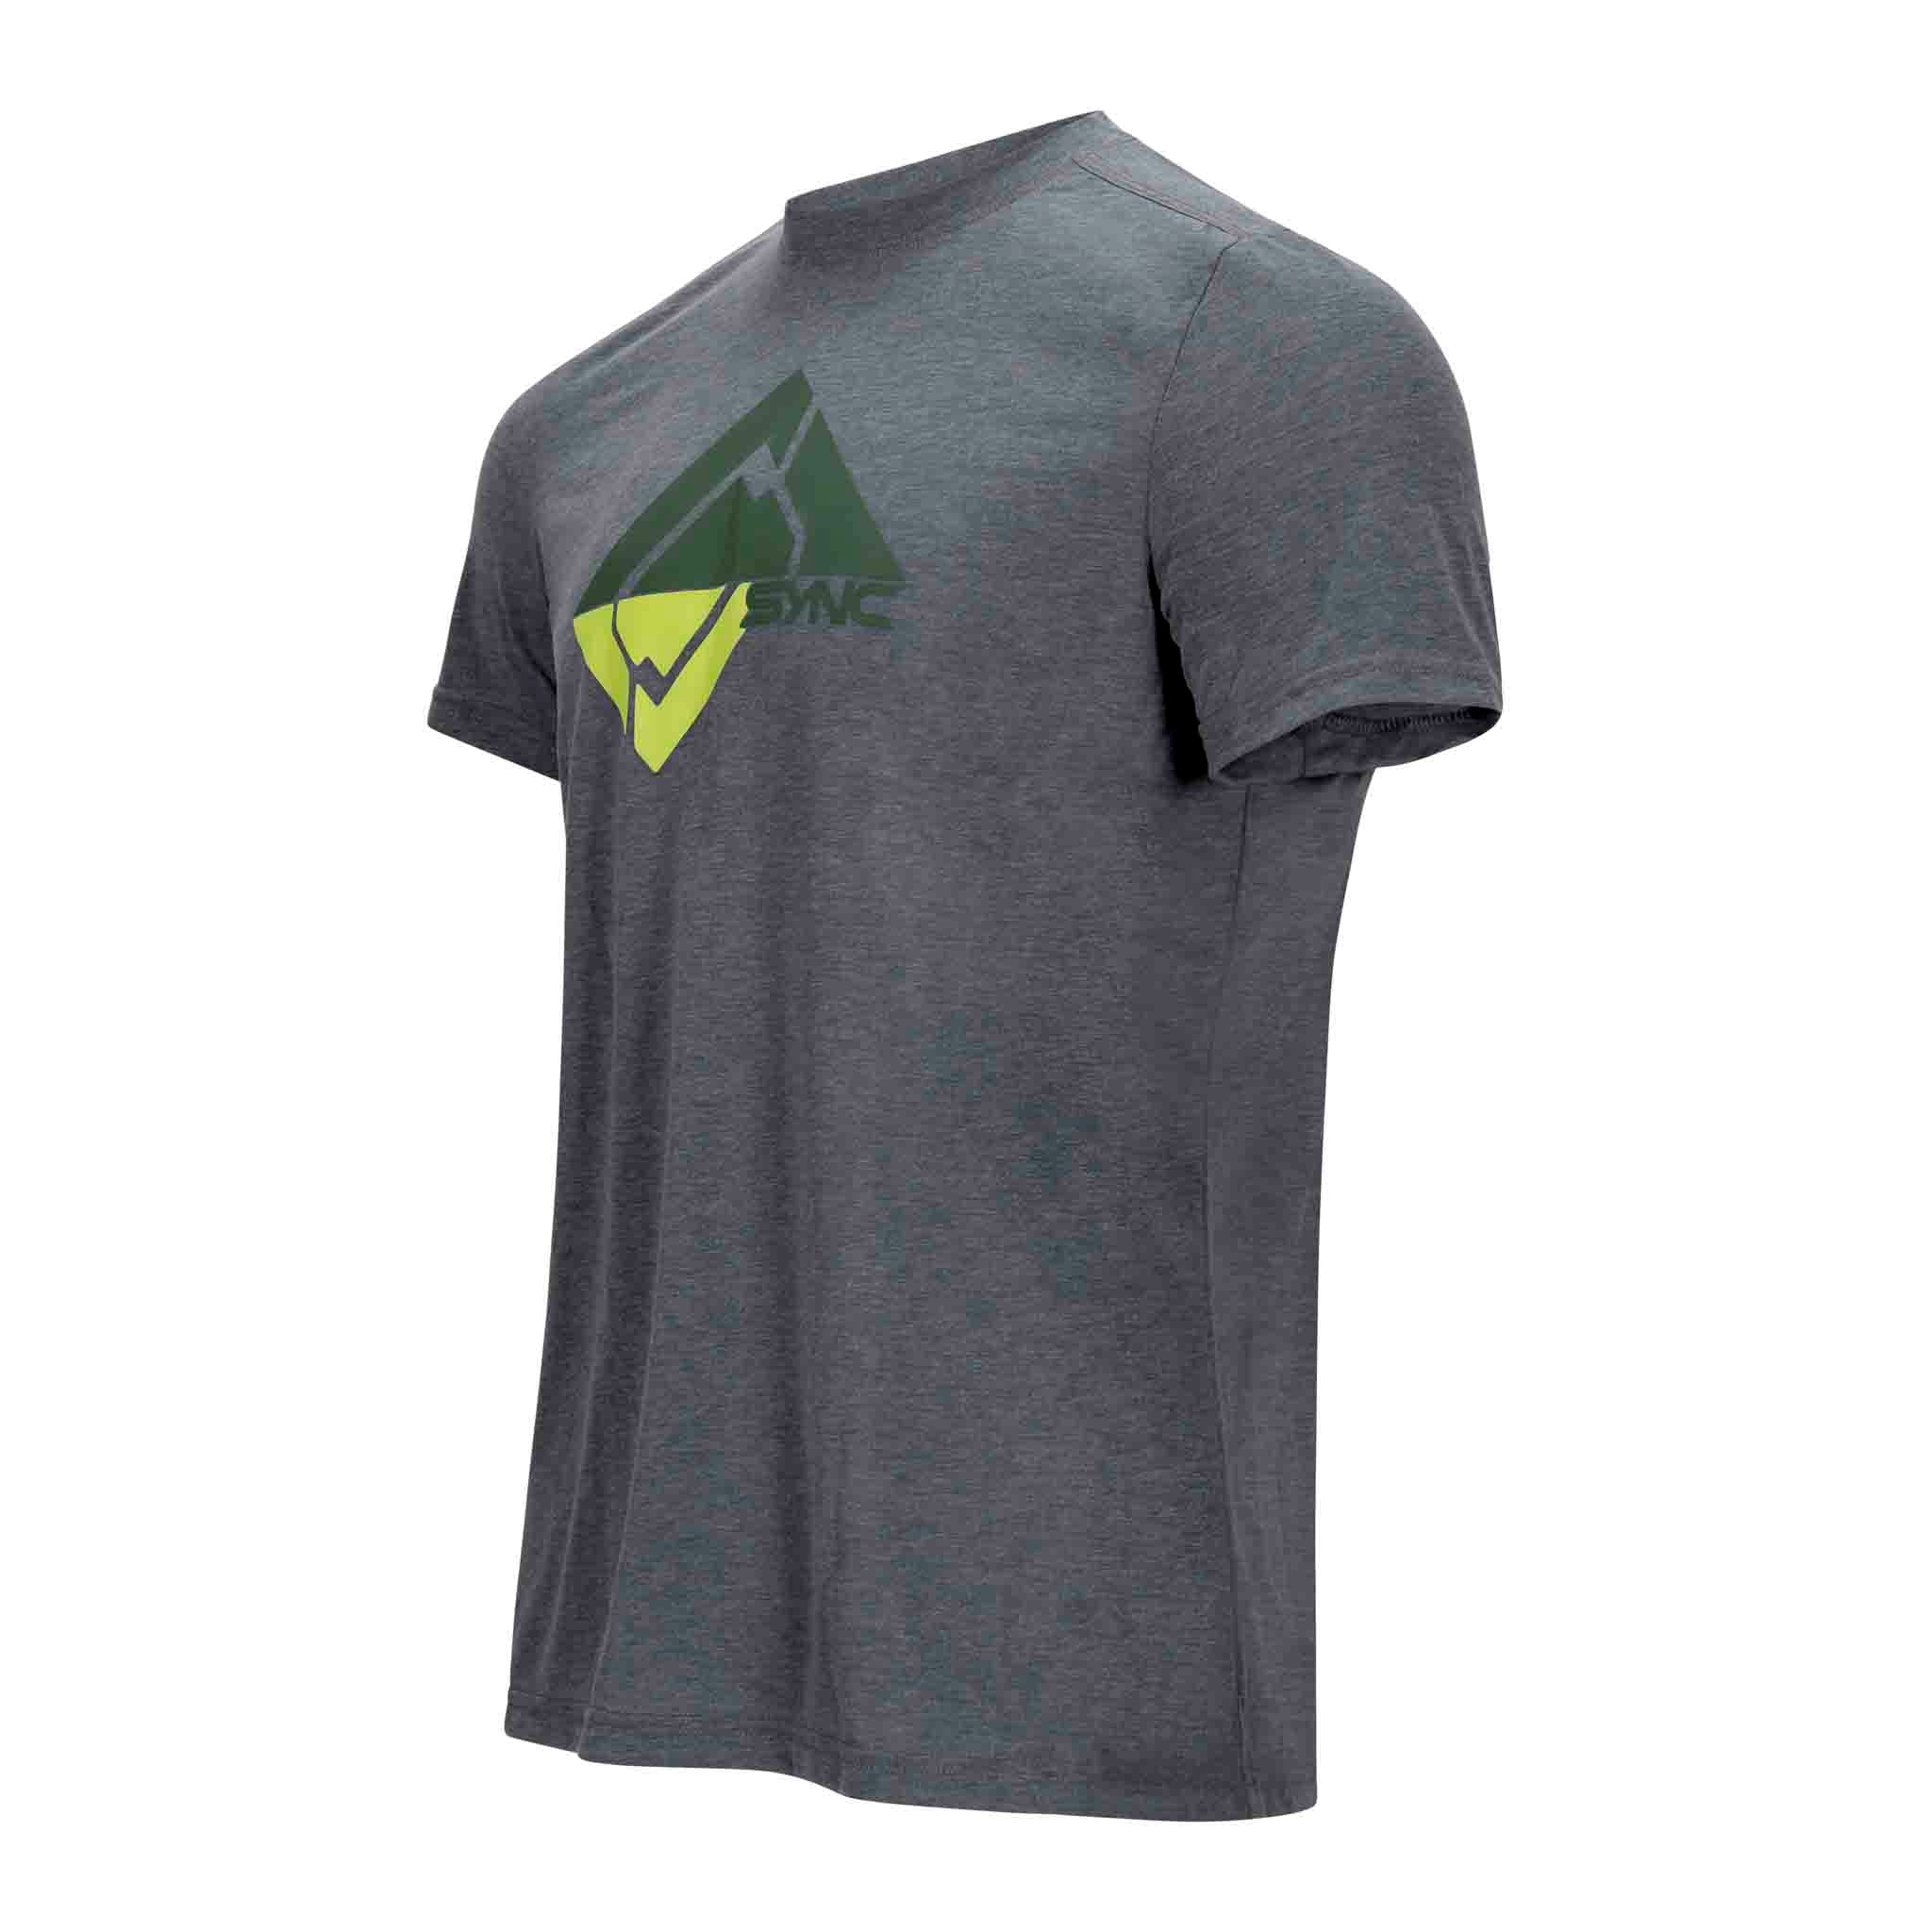 Glacier Performance Men's Shirt, 2-pack WRINKLE Free 4-Way Stretch